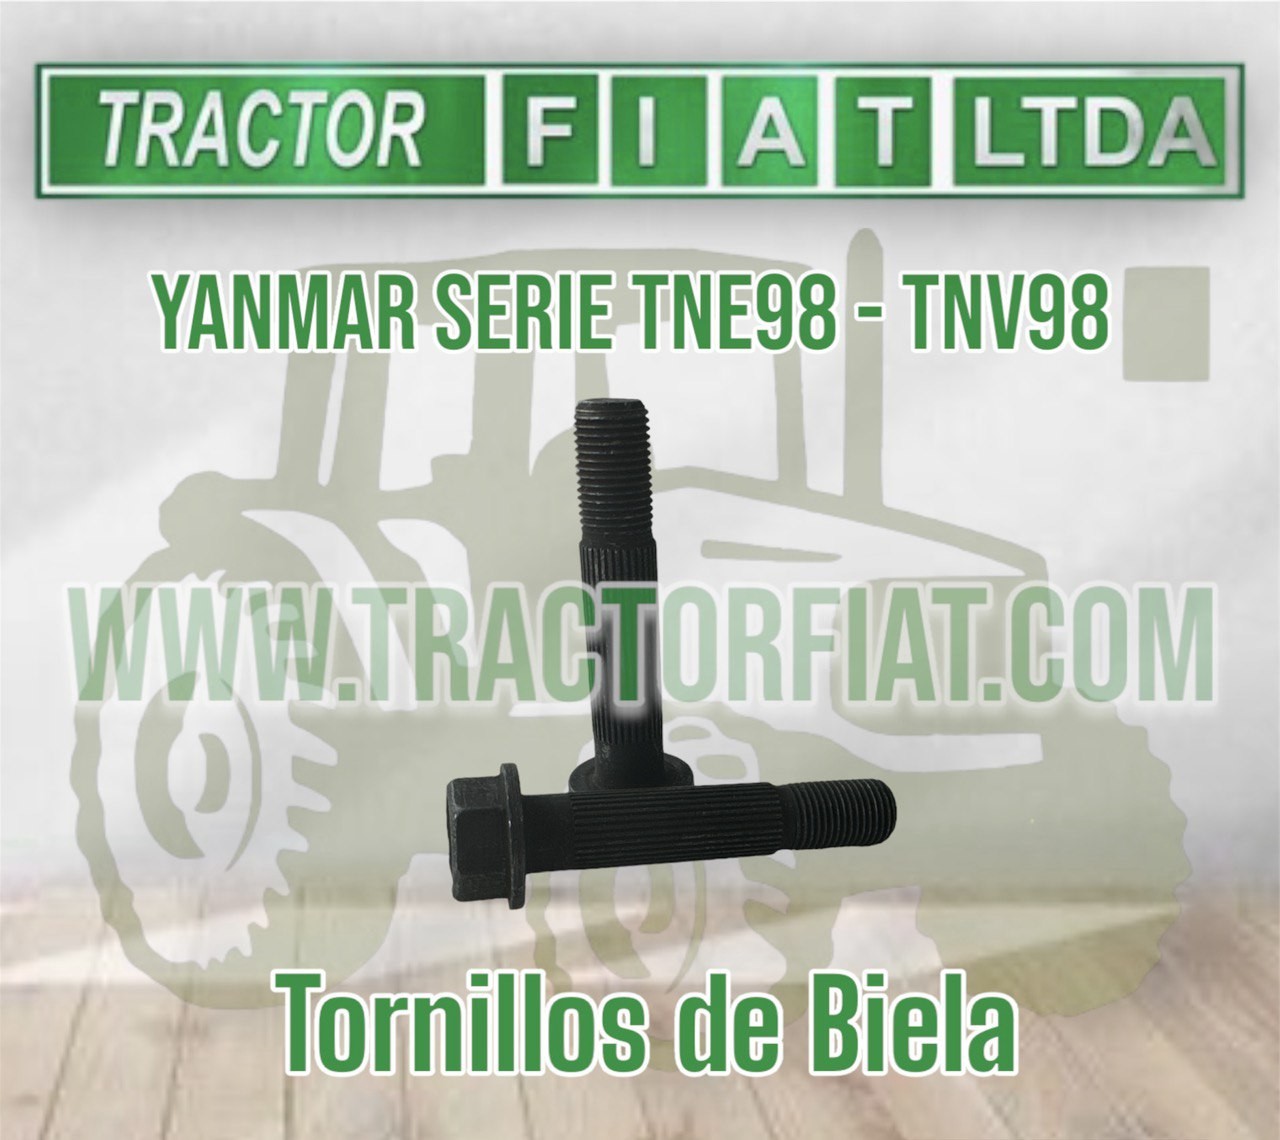 TORNILLOS DE BIELA - MOTOR YANMAR SERIES TNE98/TNV98